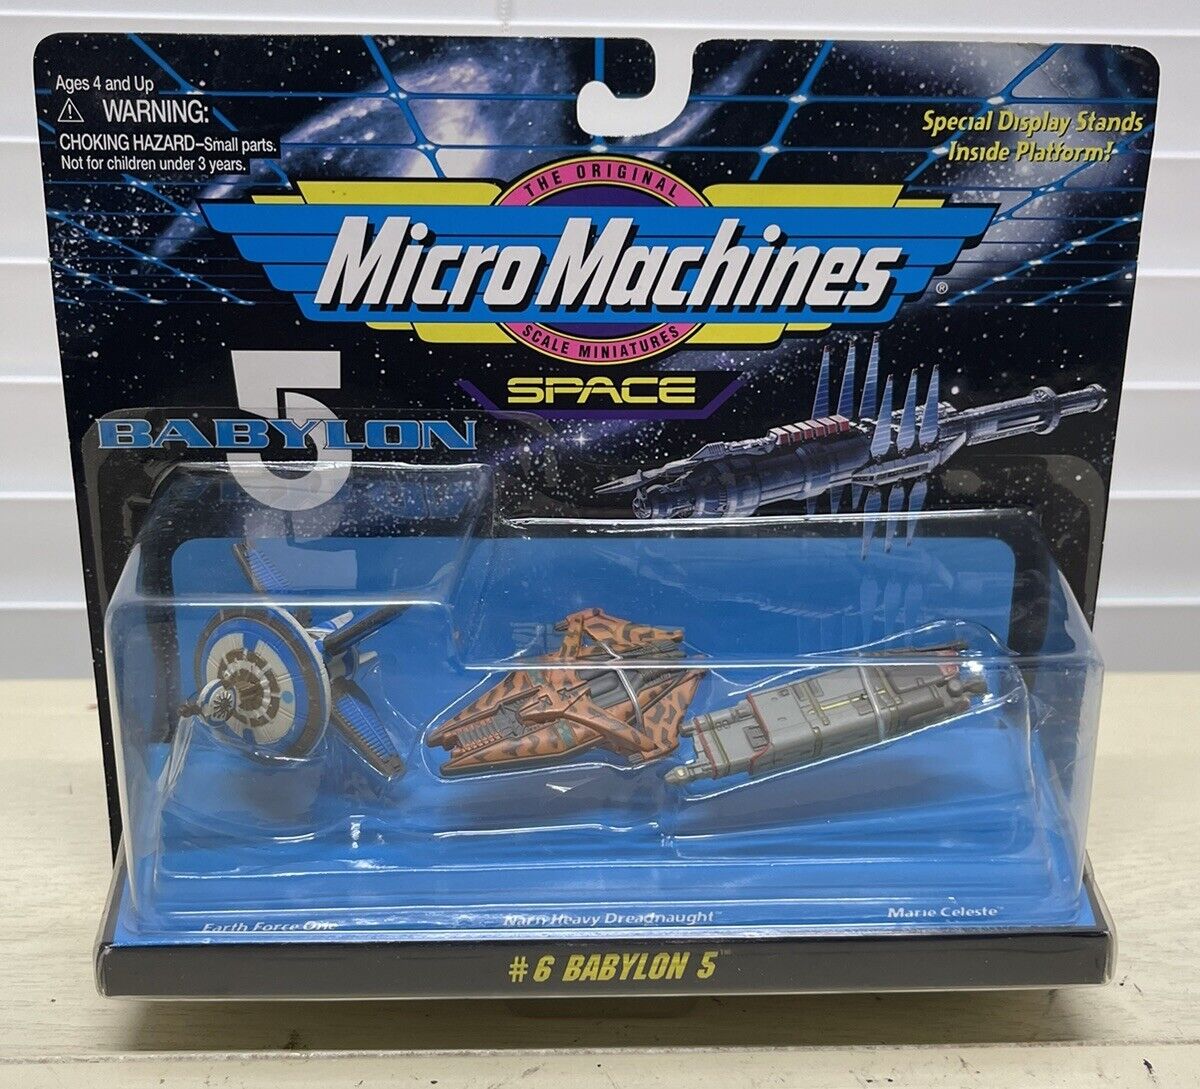 1996 Galoob - Micro Machines Babylon 5 Set #6 Factory Sealed